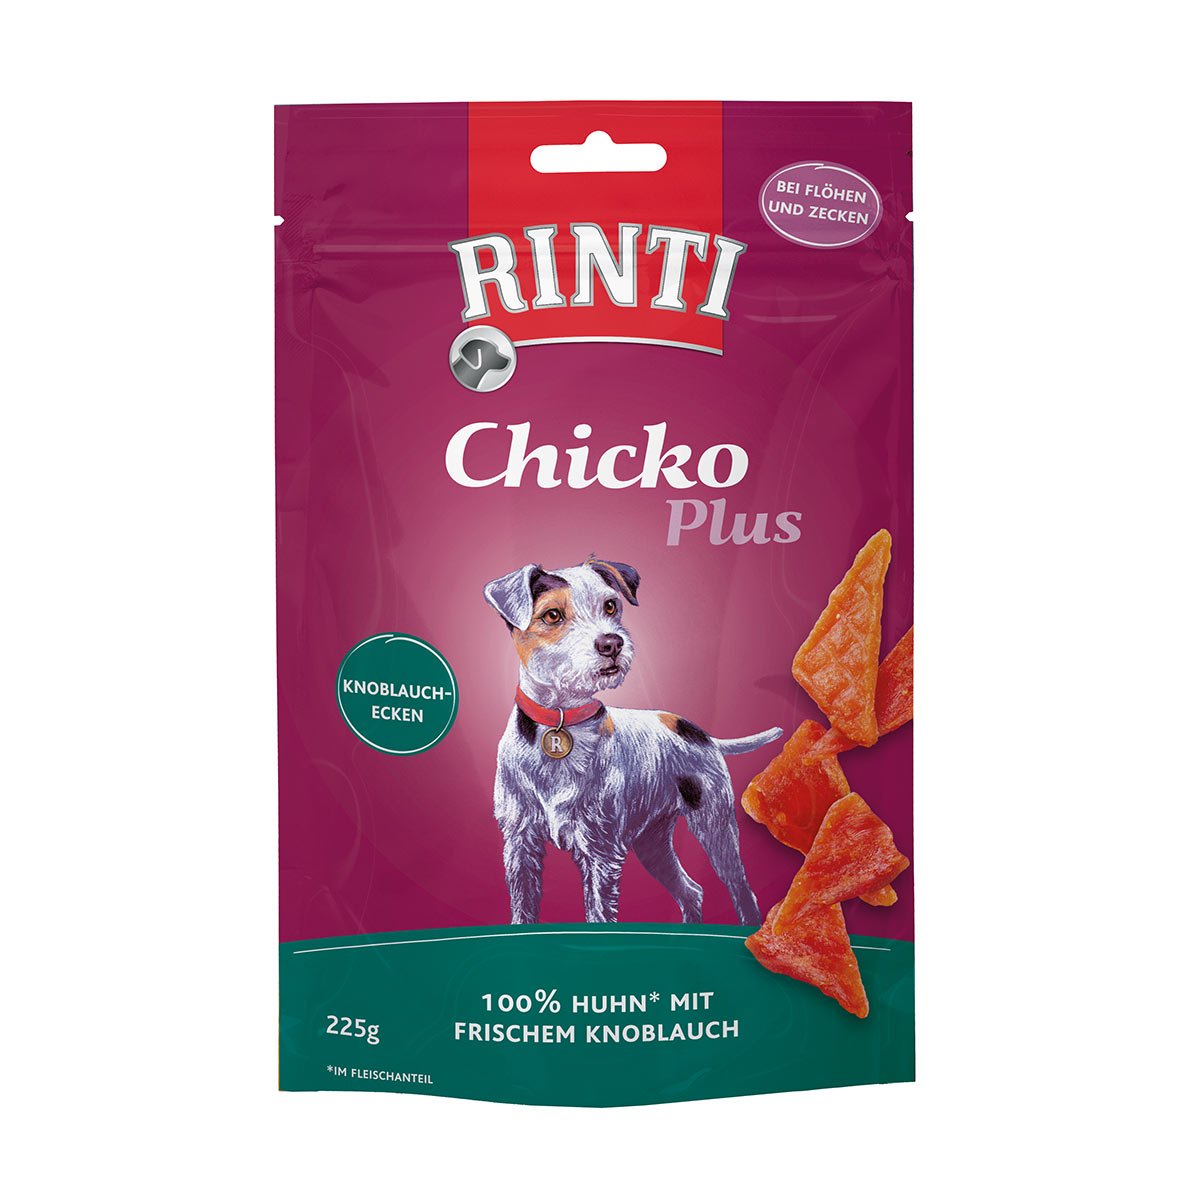 RINTI Chicko Plus Knoblauchecken 3x225g von Rinti